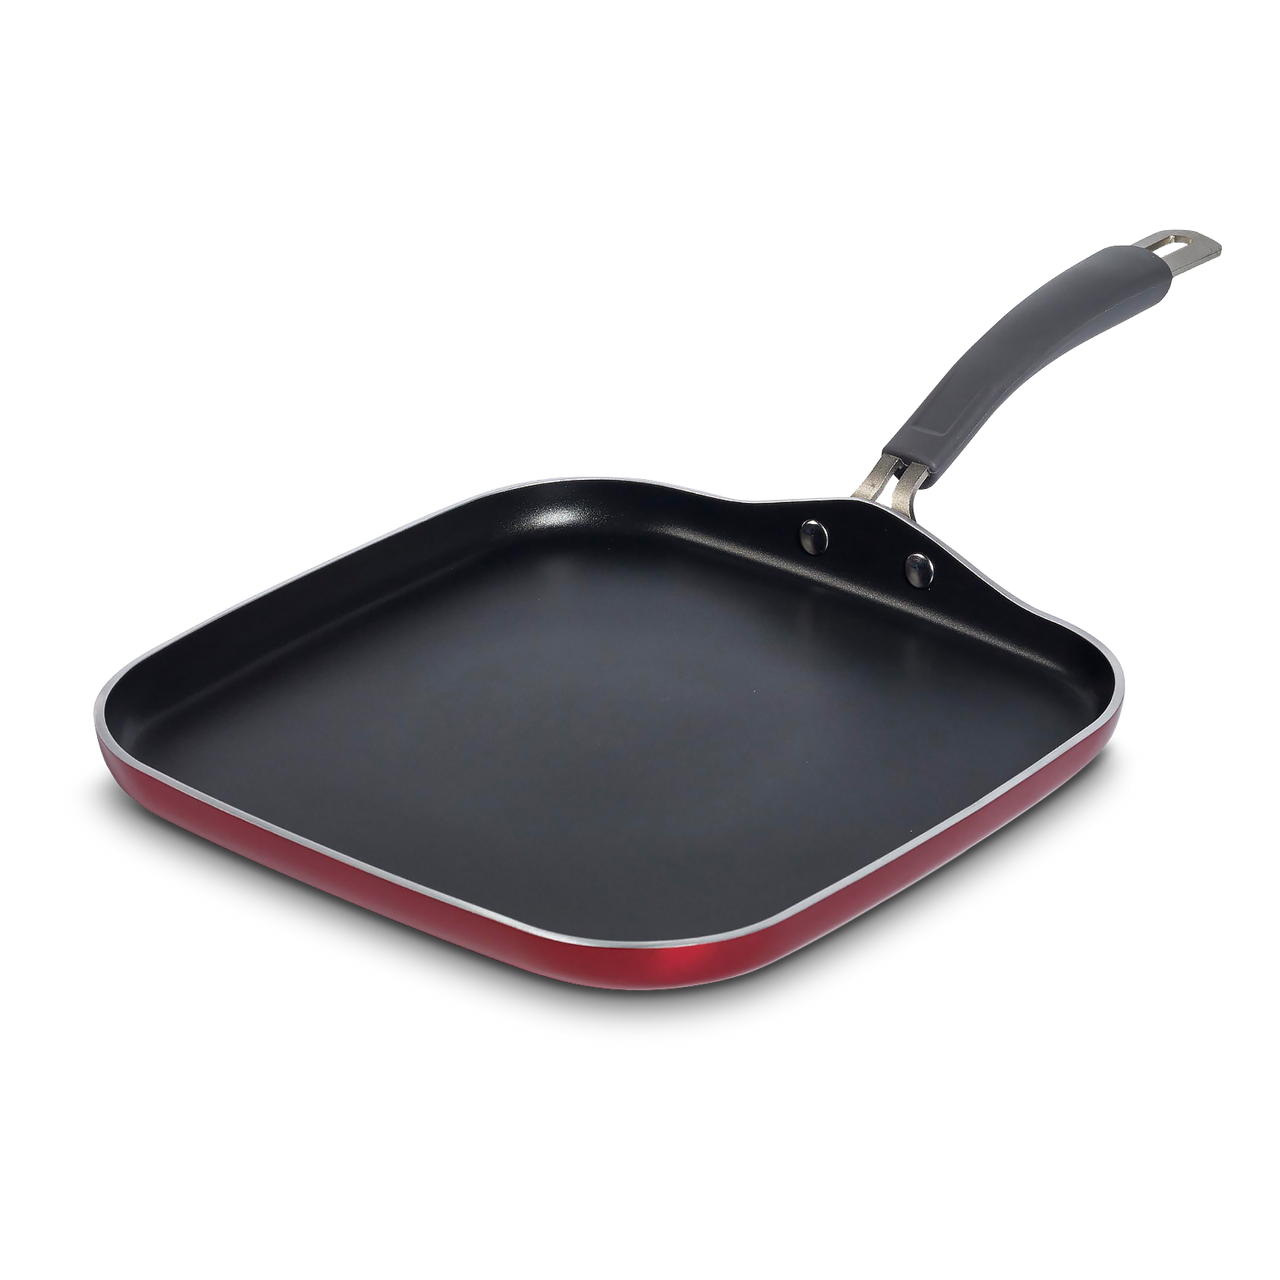 LG Range - Proper Griddle Pan Usage 